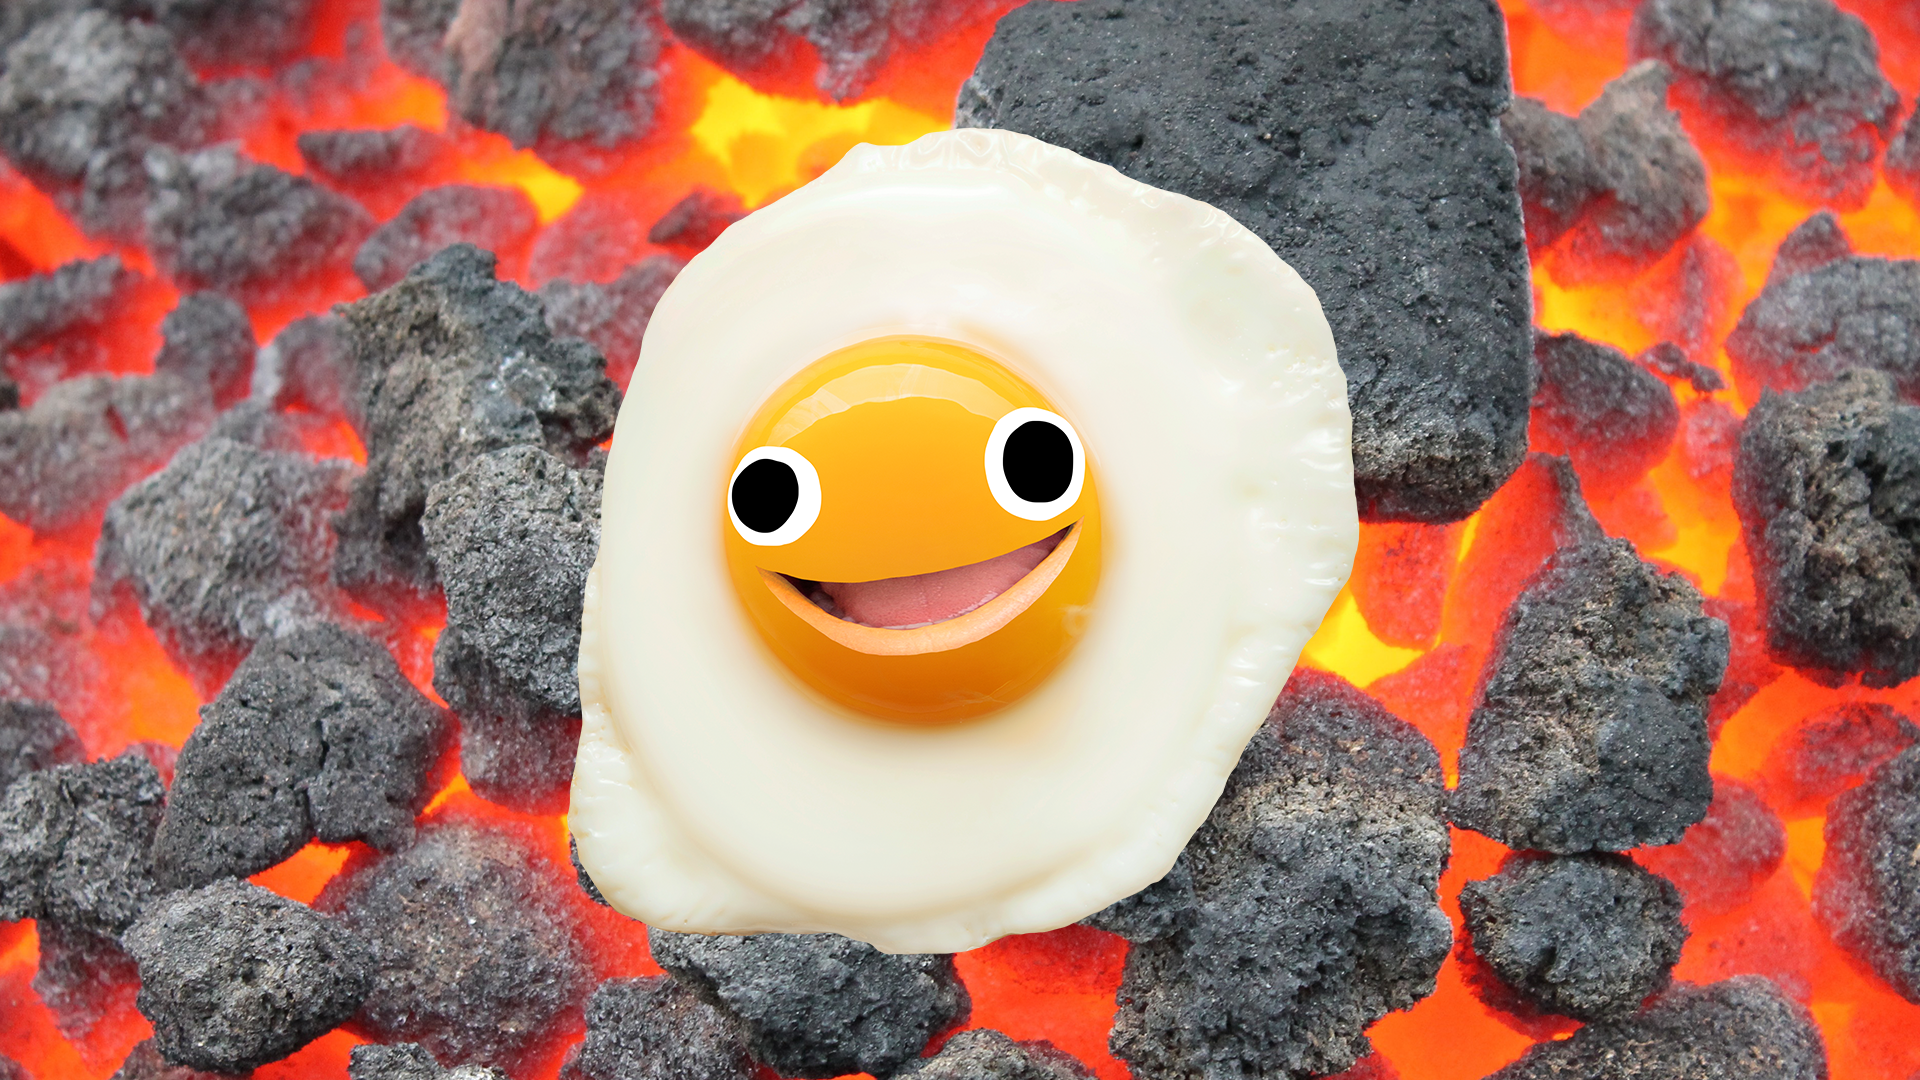 Hot coals and Beano fried egg